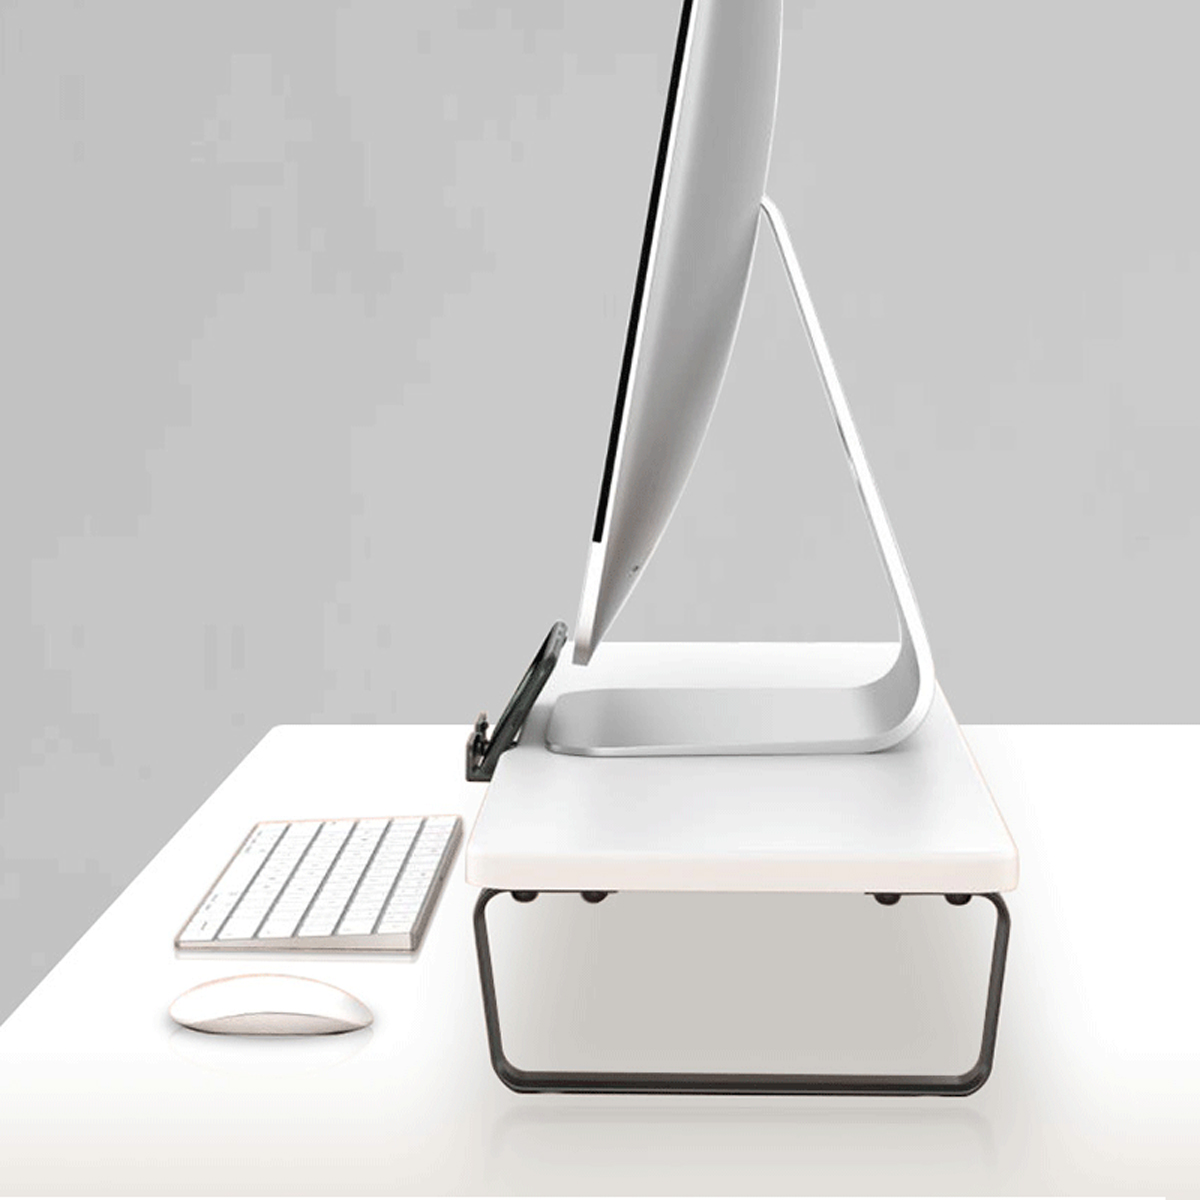 Multifunctional Mackbook Desktop Stand Monitor Riser with 2*USB2.0 + USB3.0 Ports & Mobile Phone Holder